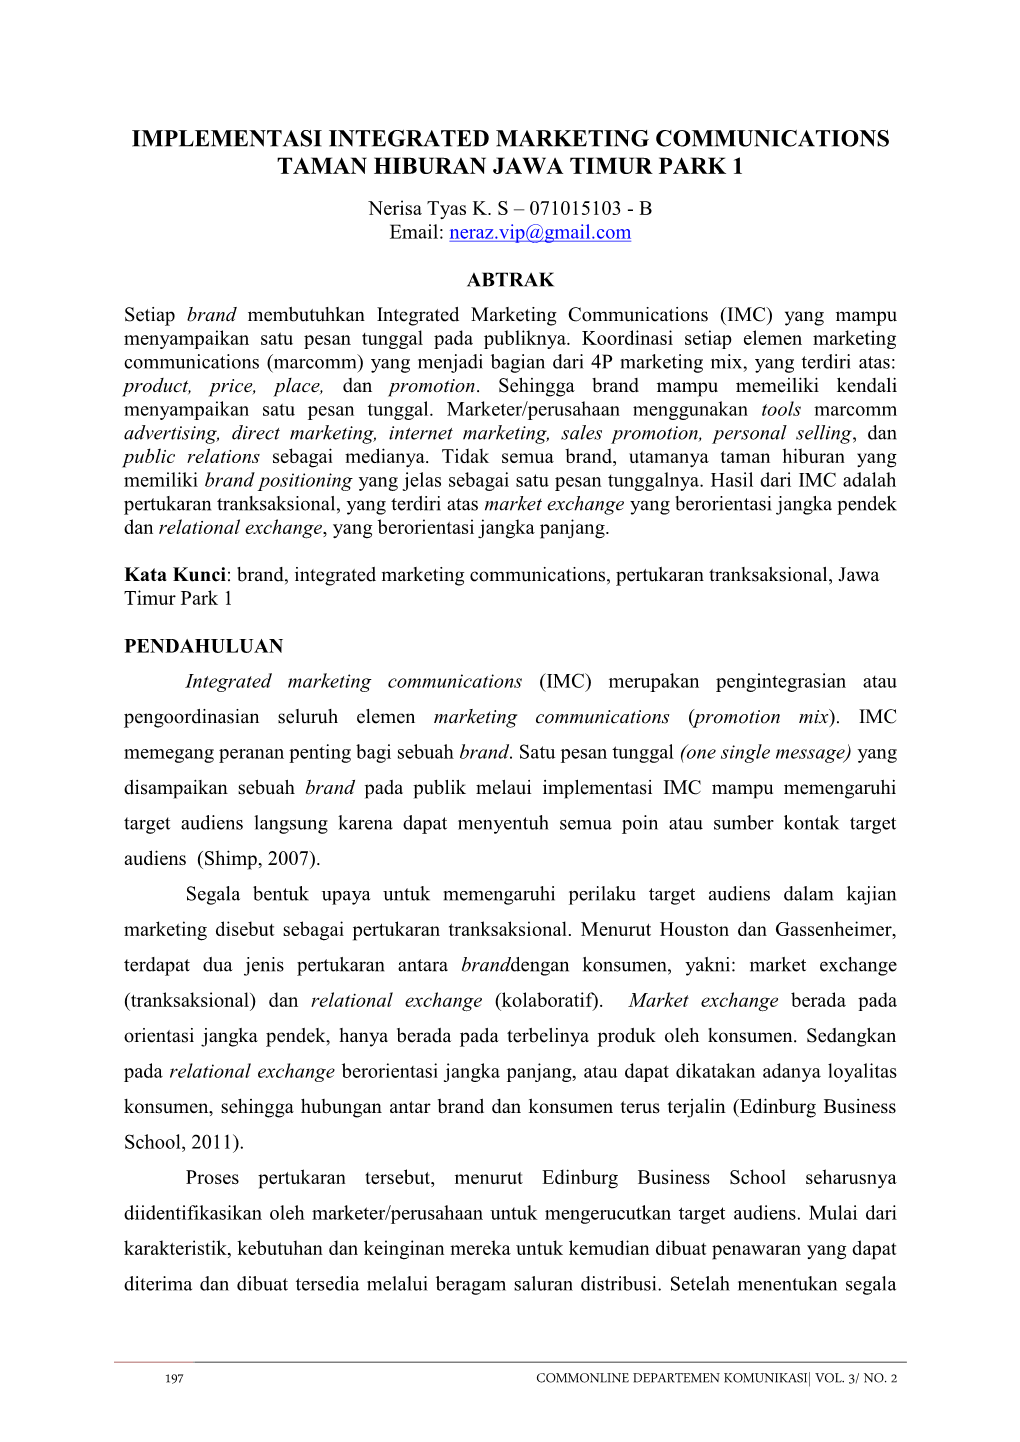 Implementasi Integrated Marketing Communications Taman Hiburan Jawa Timur Park 1